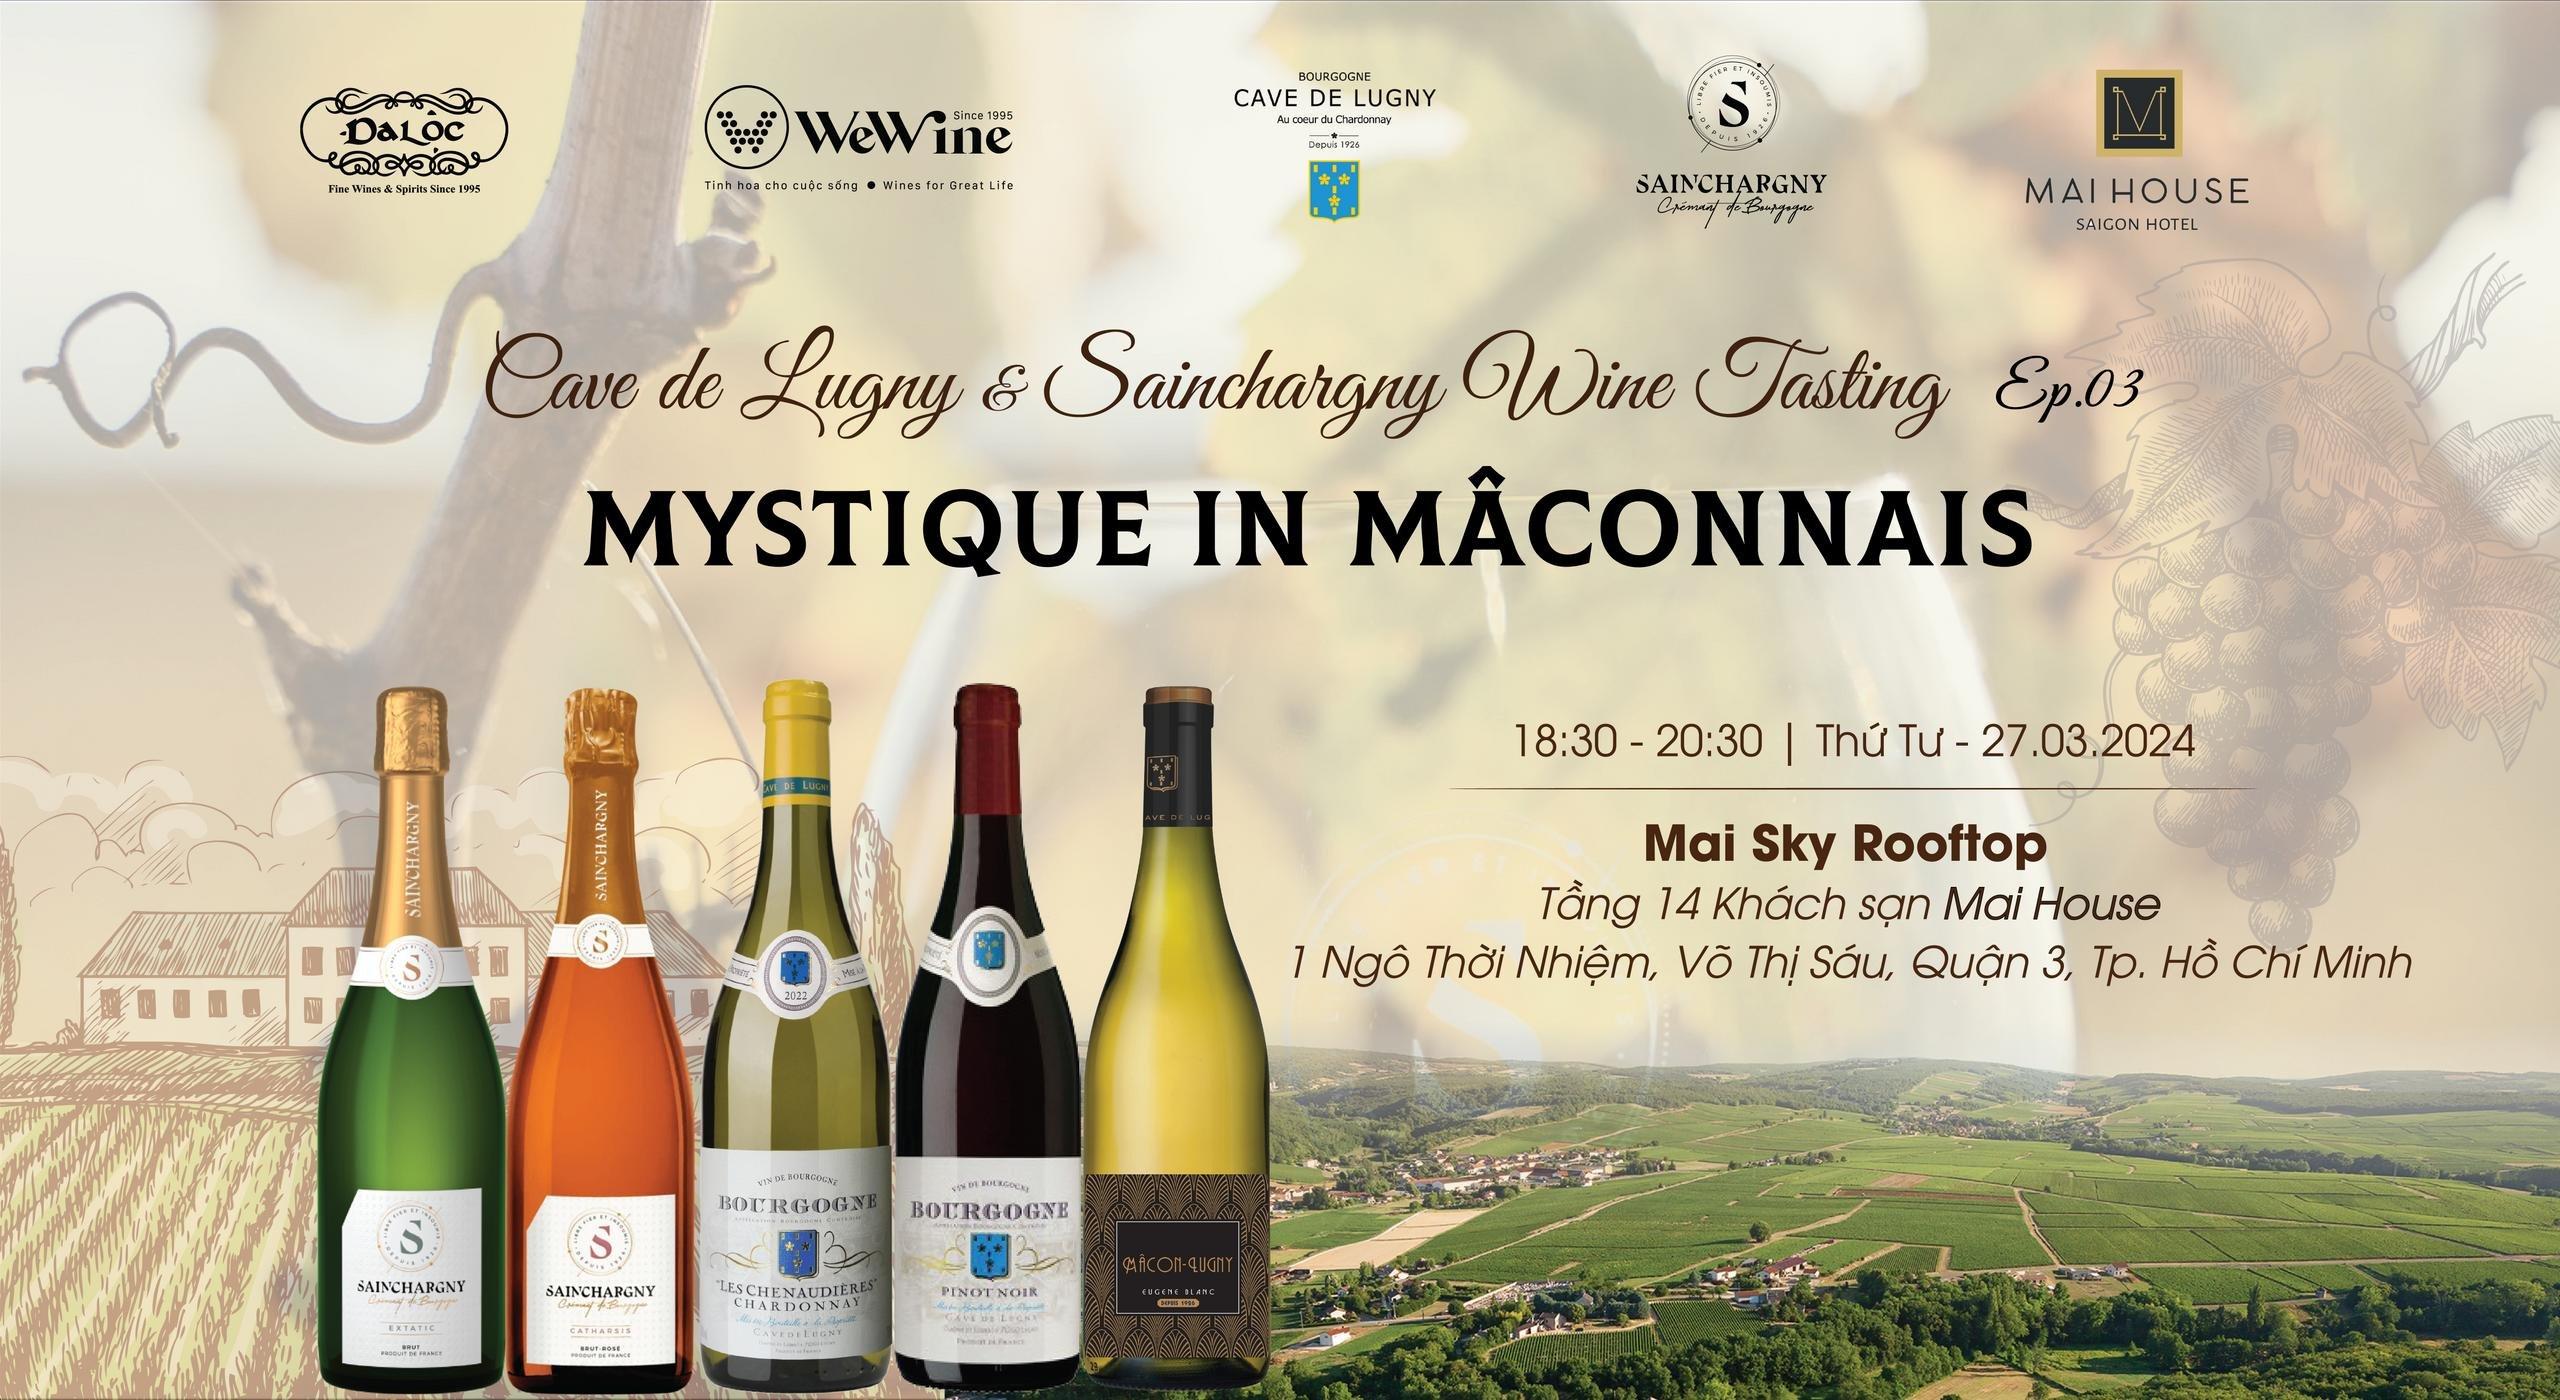 Cave de Lugny & Sainchargny Wine Tasting - Mystique in Mâconnais